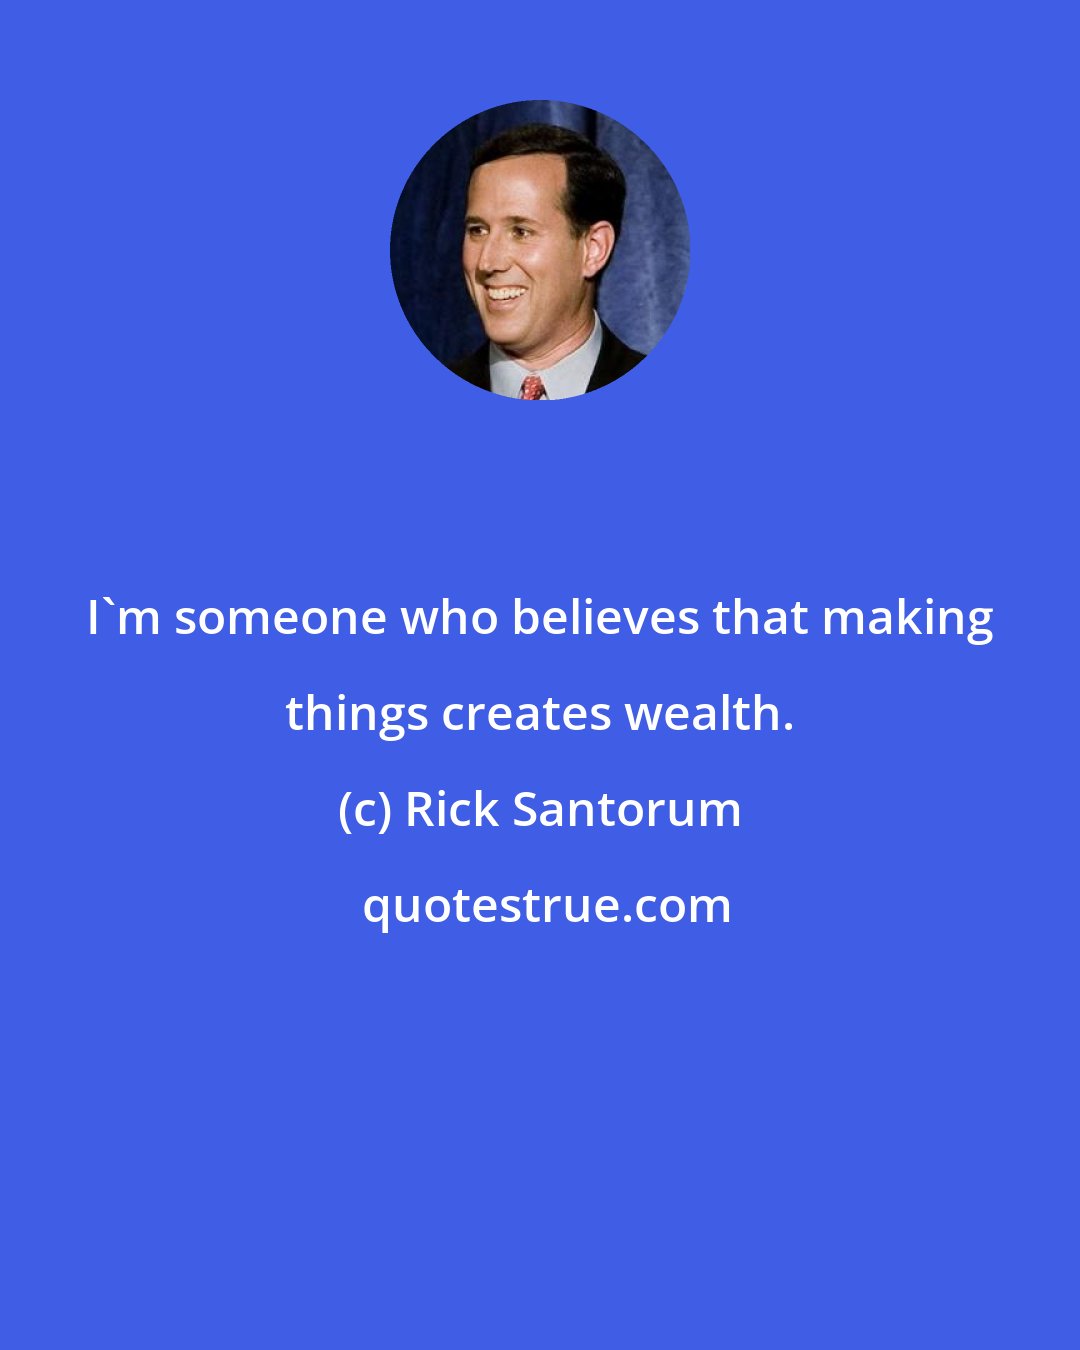 Rick Santorum: I'm someone who believes that making things creates wealth.